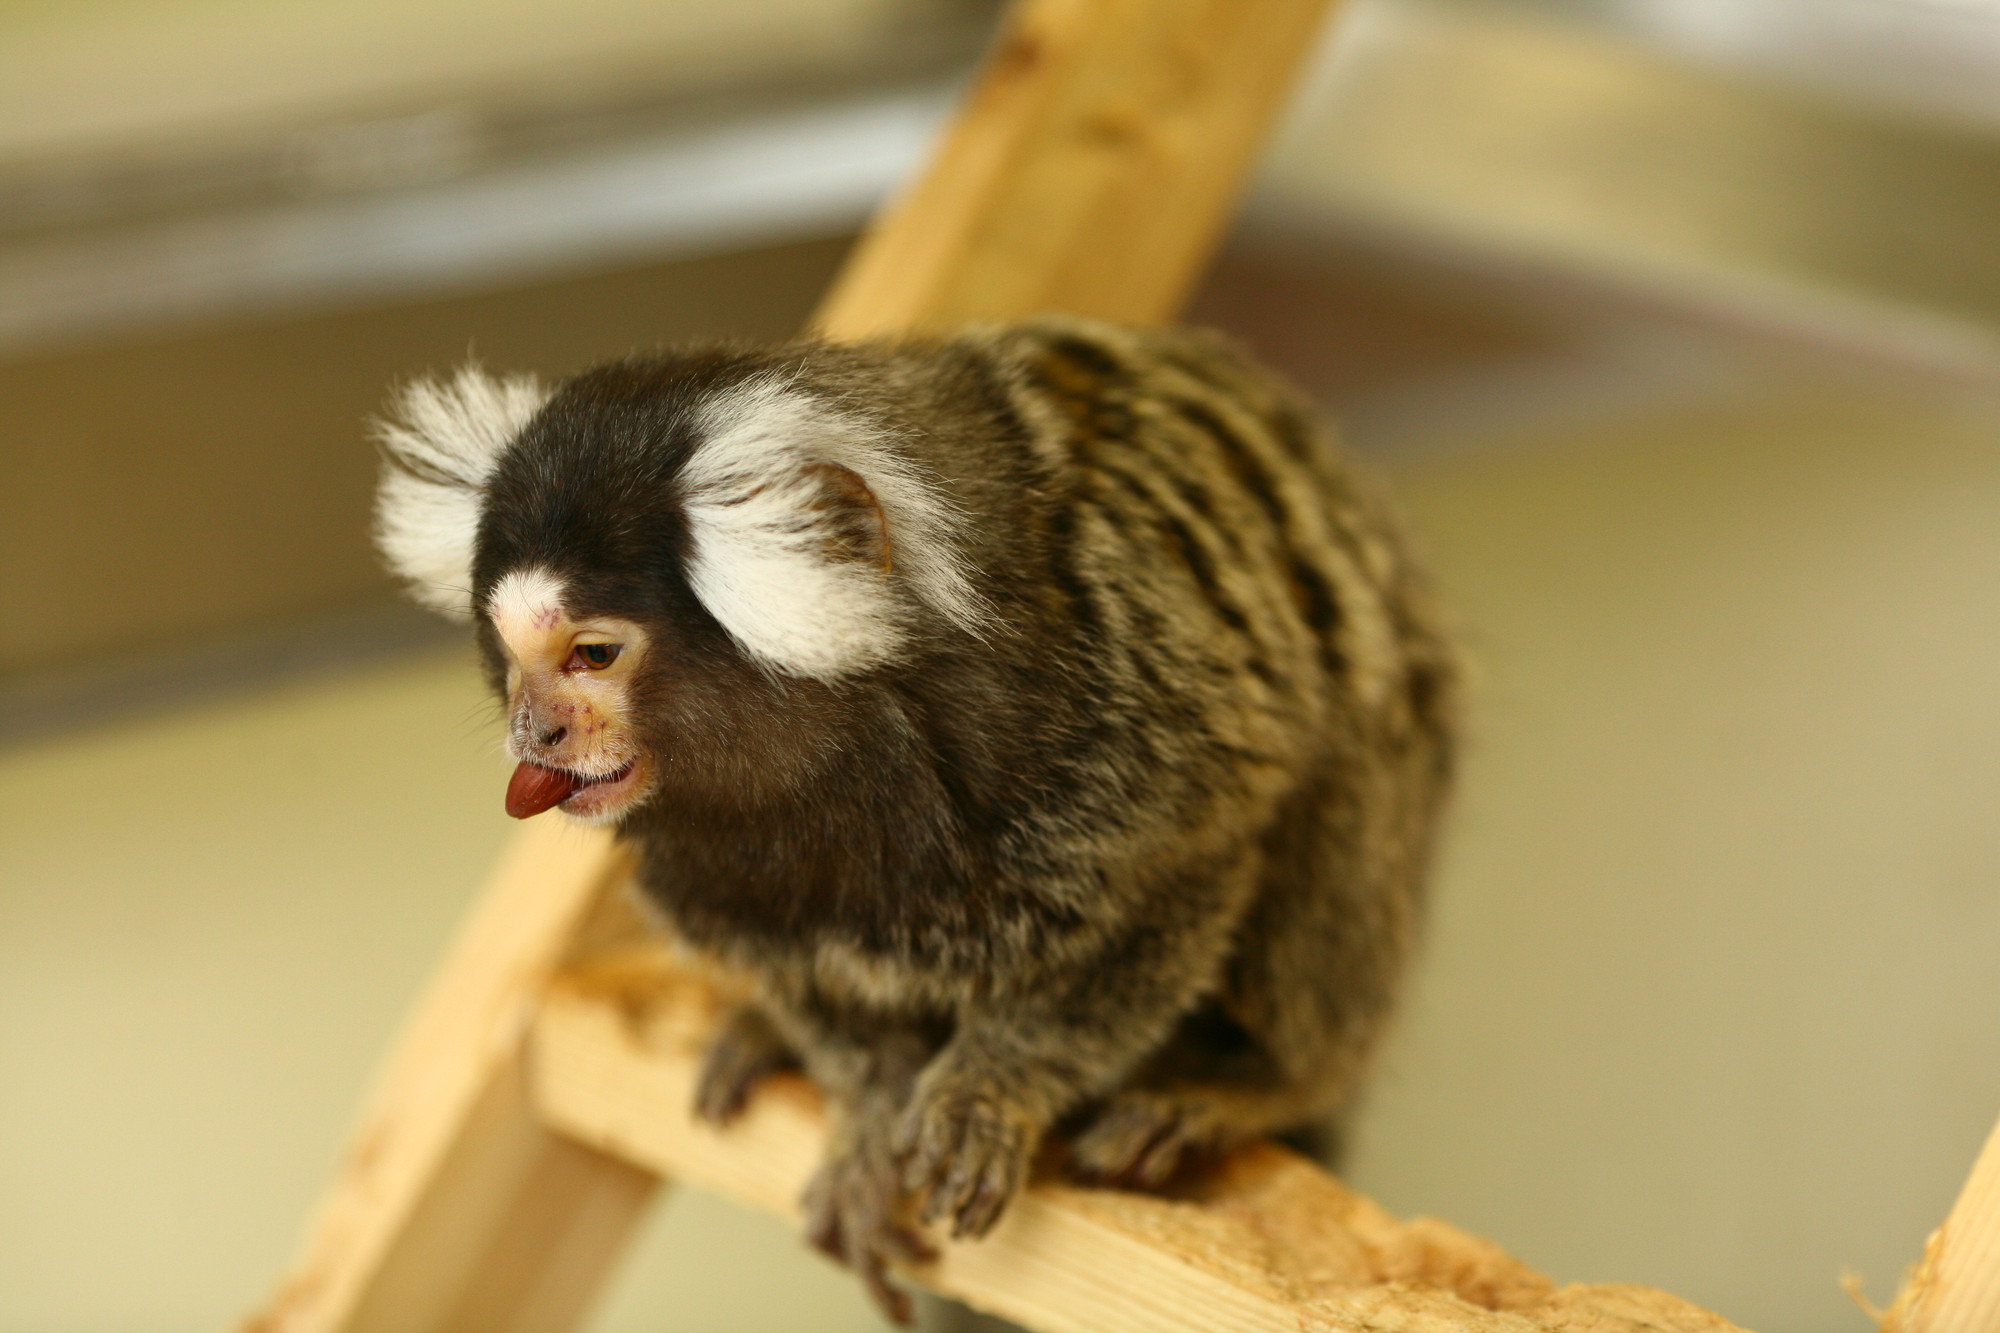 single-marmoset-sits-on-ladder-animal-testing.jpg